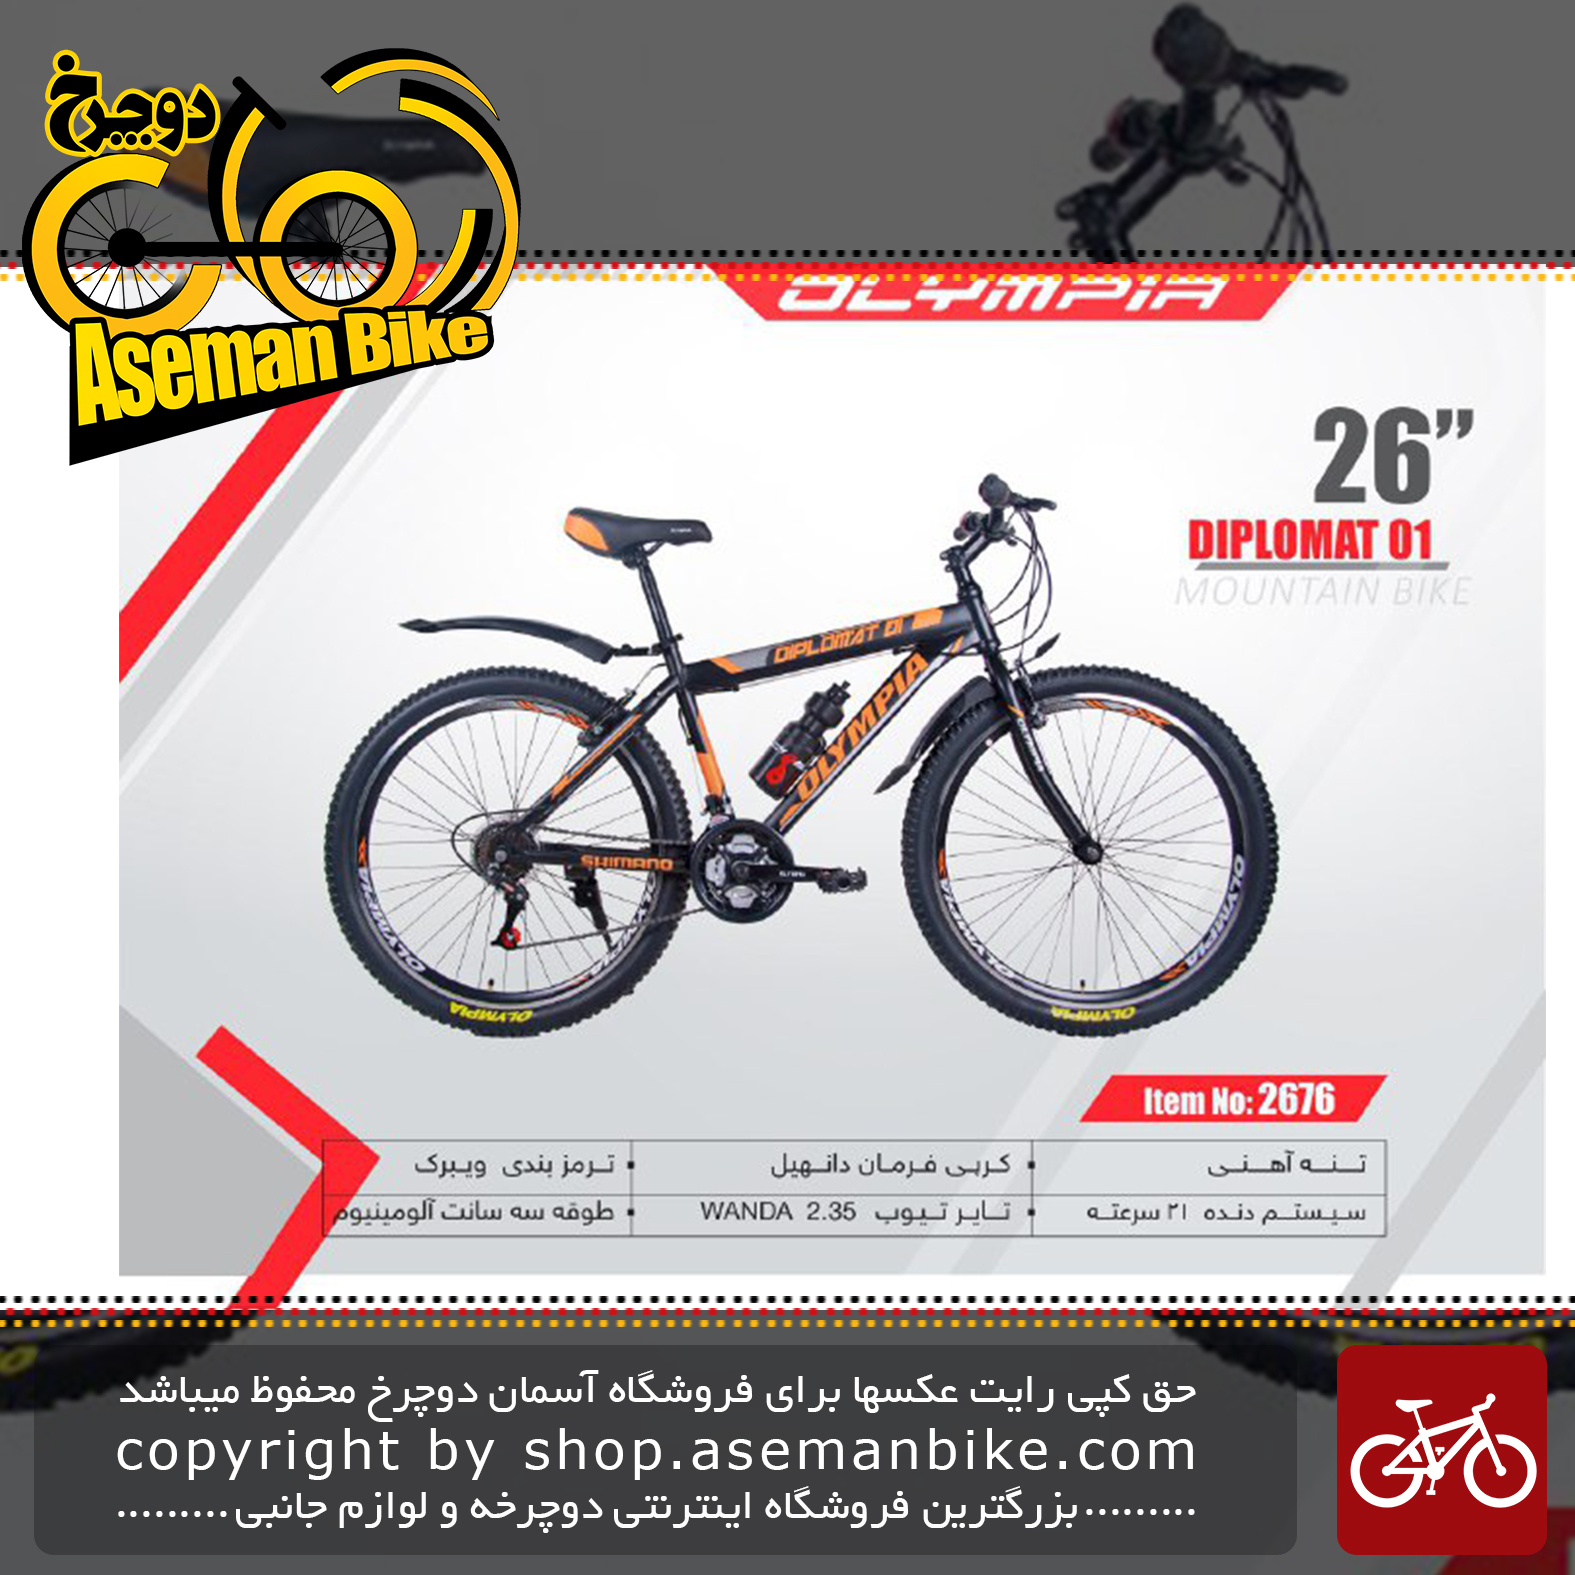 دوچرخه کوهستان المپیا سایز 26مدل دیپلومات 01 OLYMPIA SIZE 26 DIPLOMAT 01